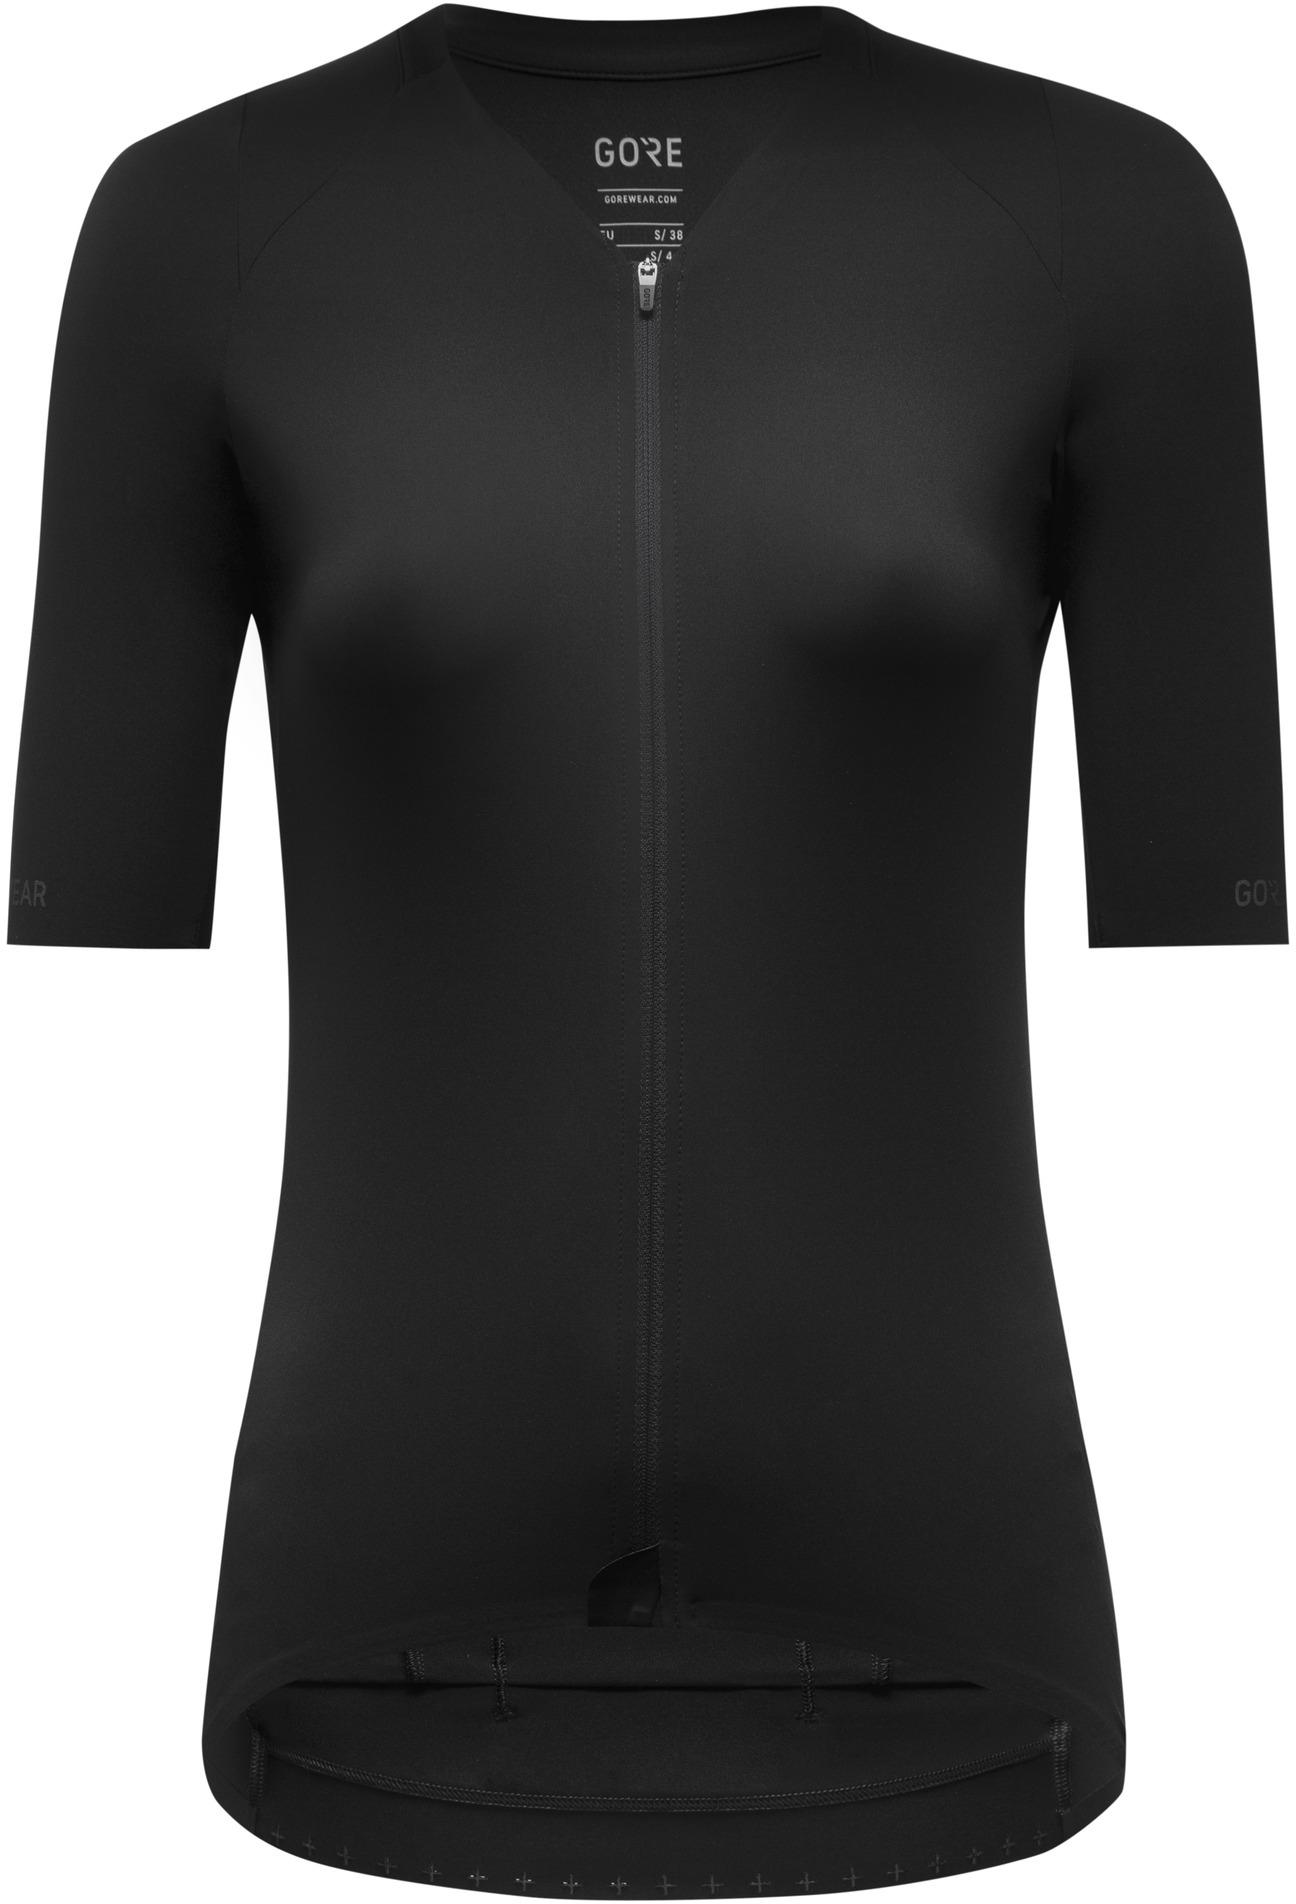 Gorewear Womens Distance Jersey - Black